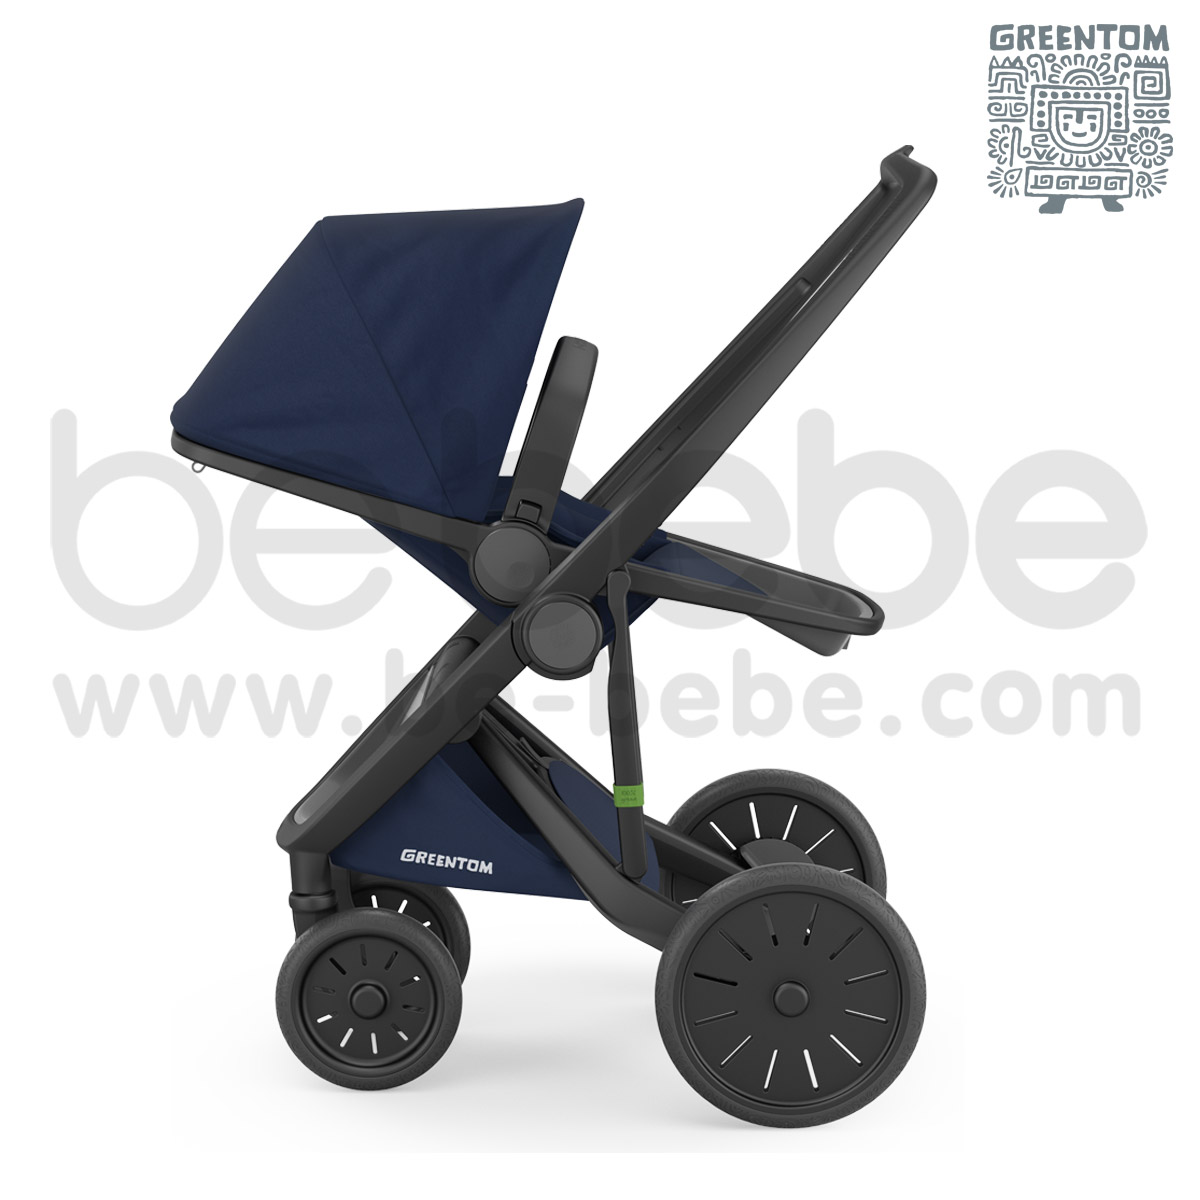 Greentom : Revesible Balck Frame Stroller - Blue 